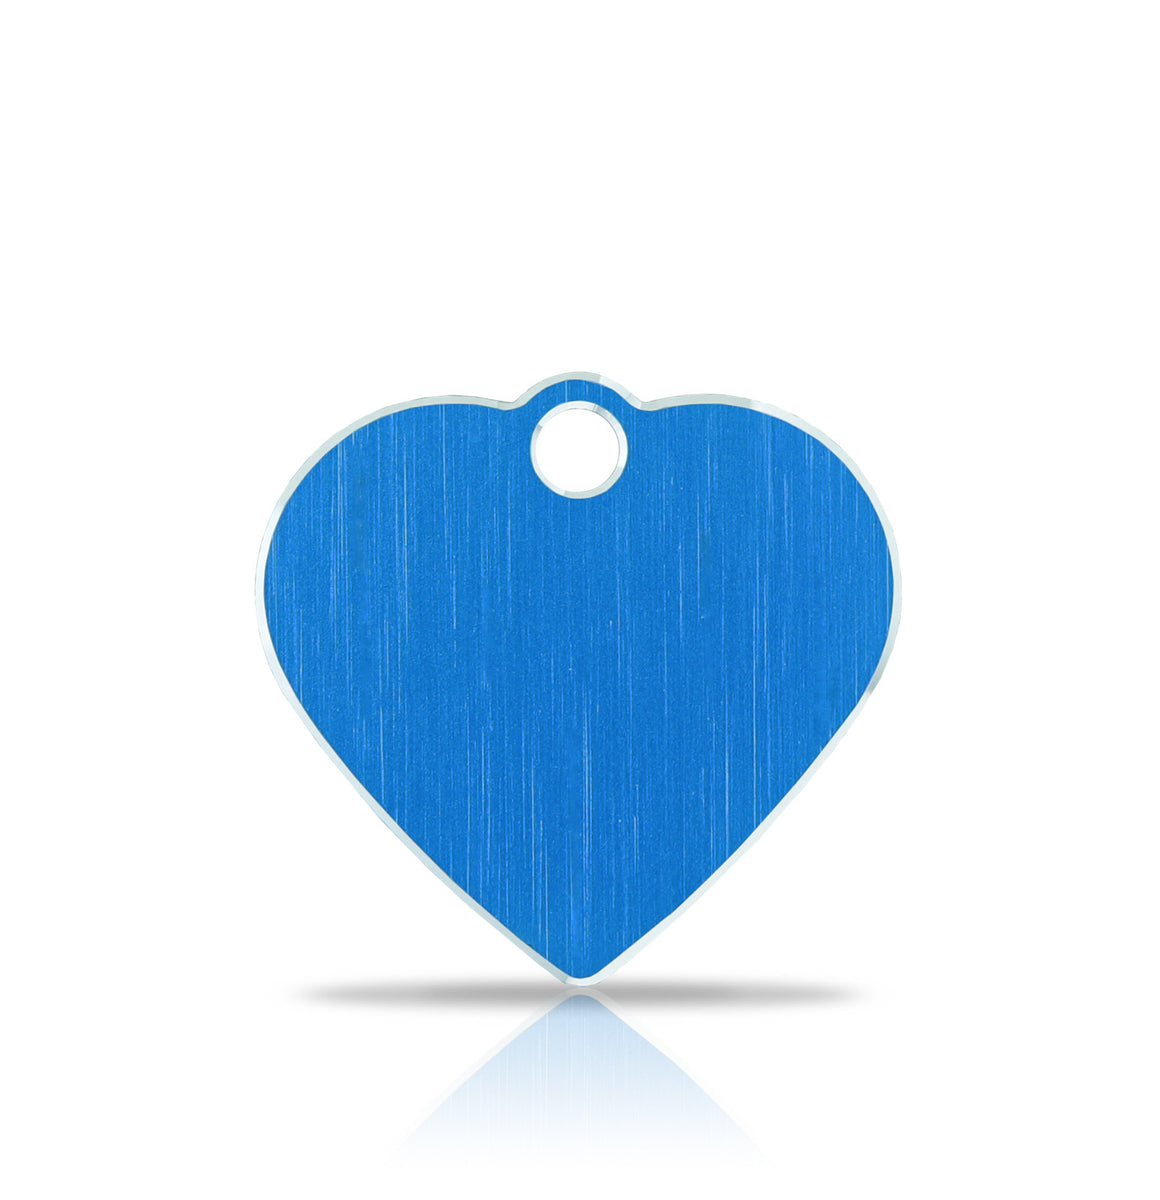 TaggIT Hi-Line Aluminium Small Blue Heart iMarc Pet Tag